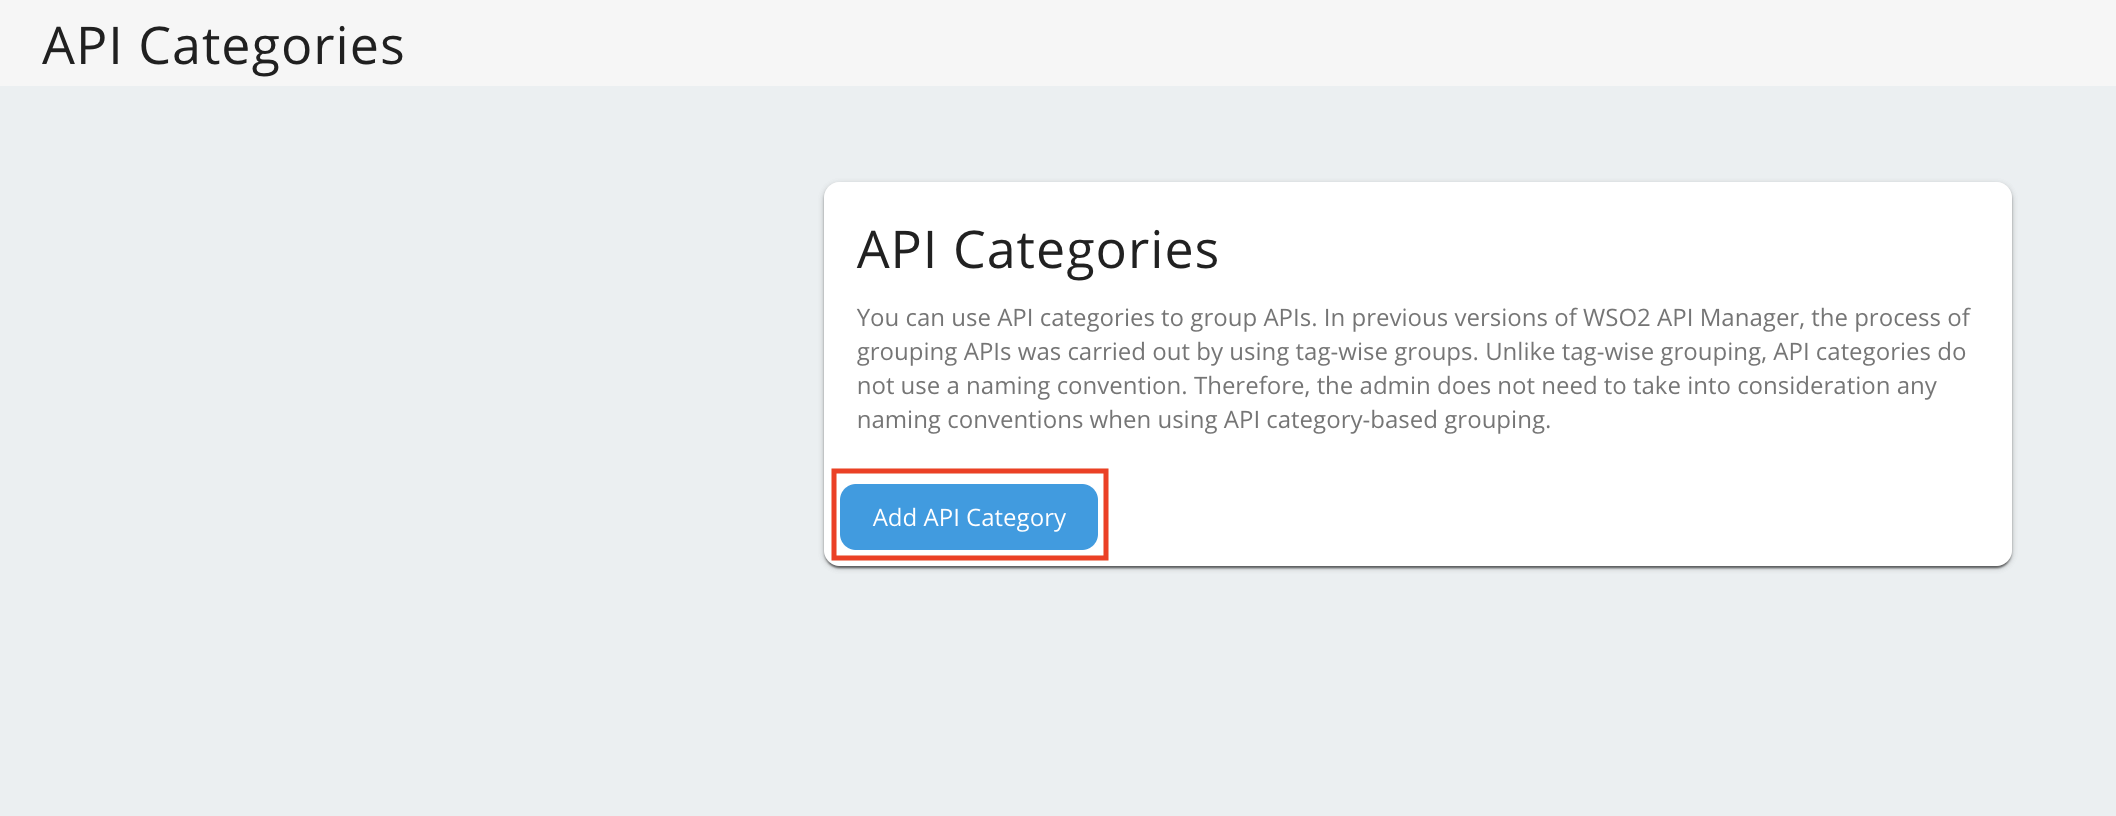 Add API category page